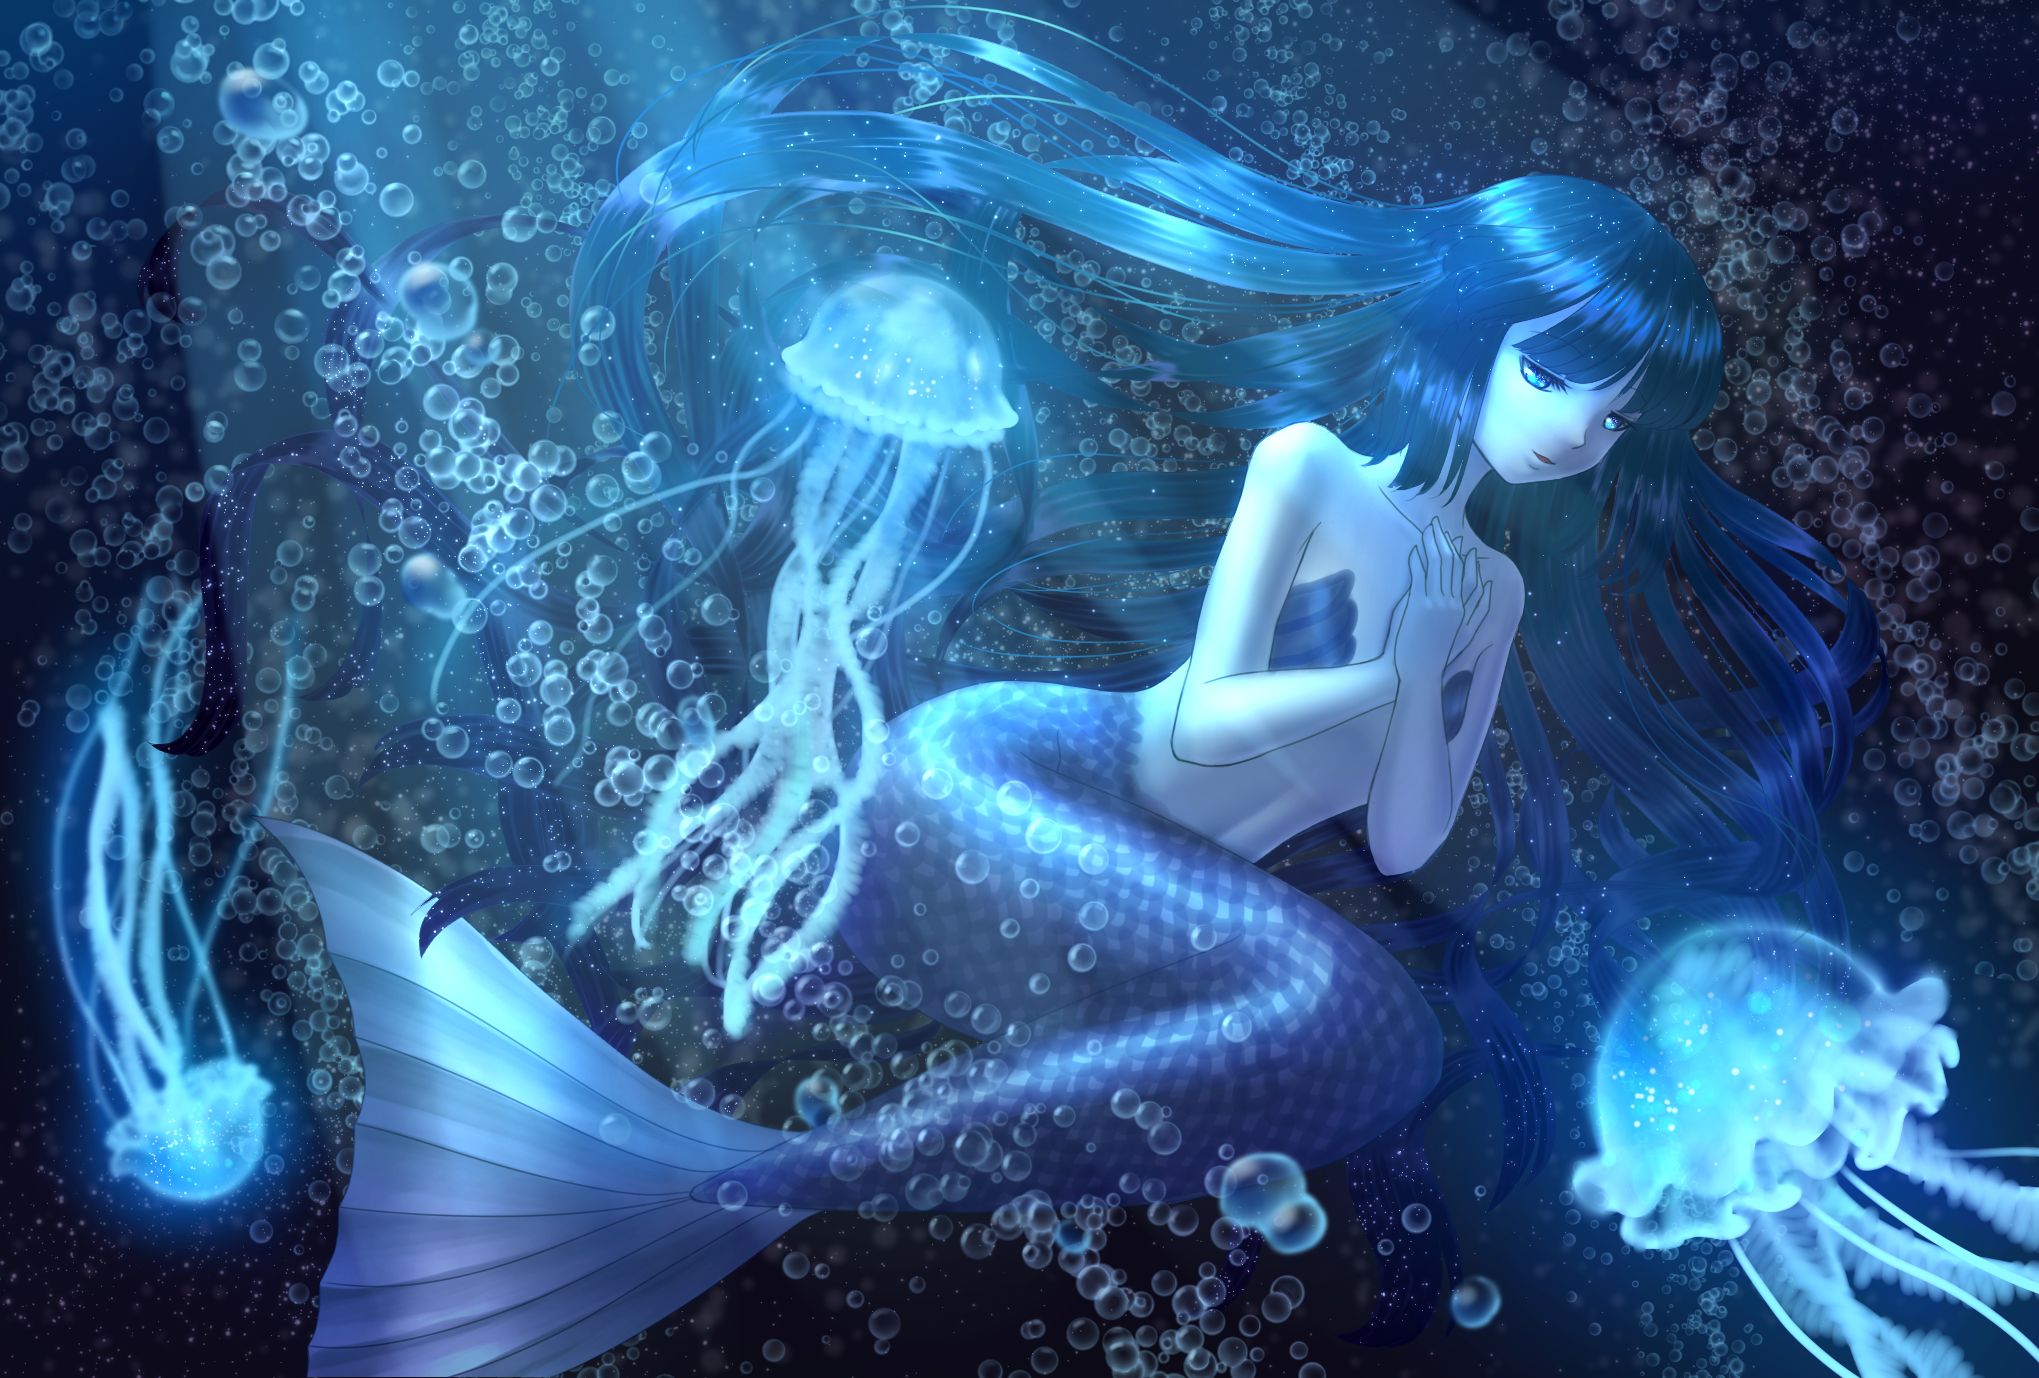 Descarga gratuita de fondo de pantalla para móvil de Fantasía, Medusa, Sirena.